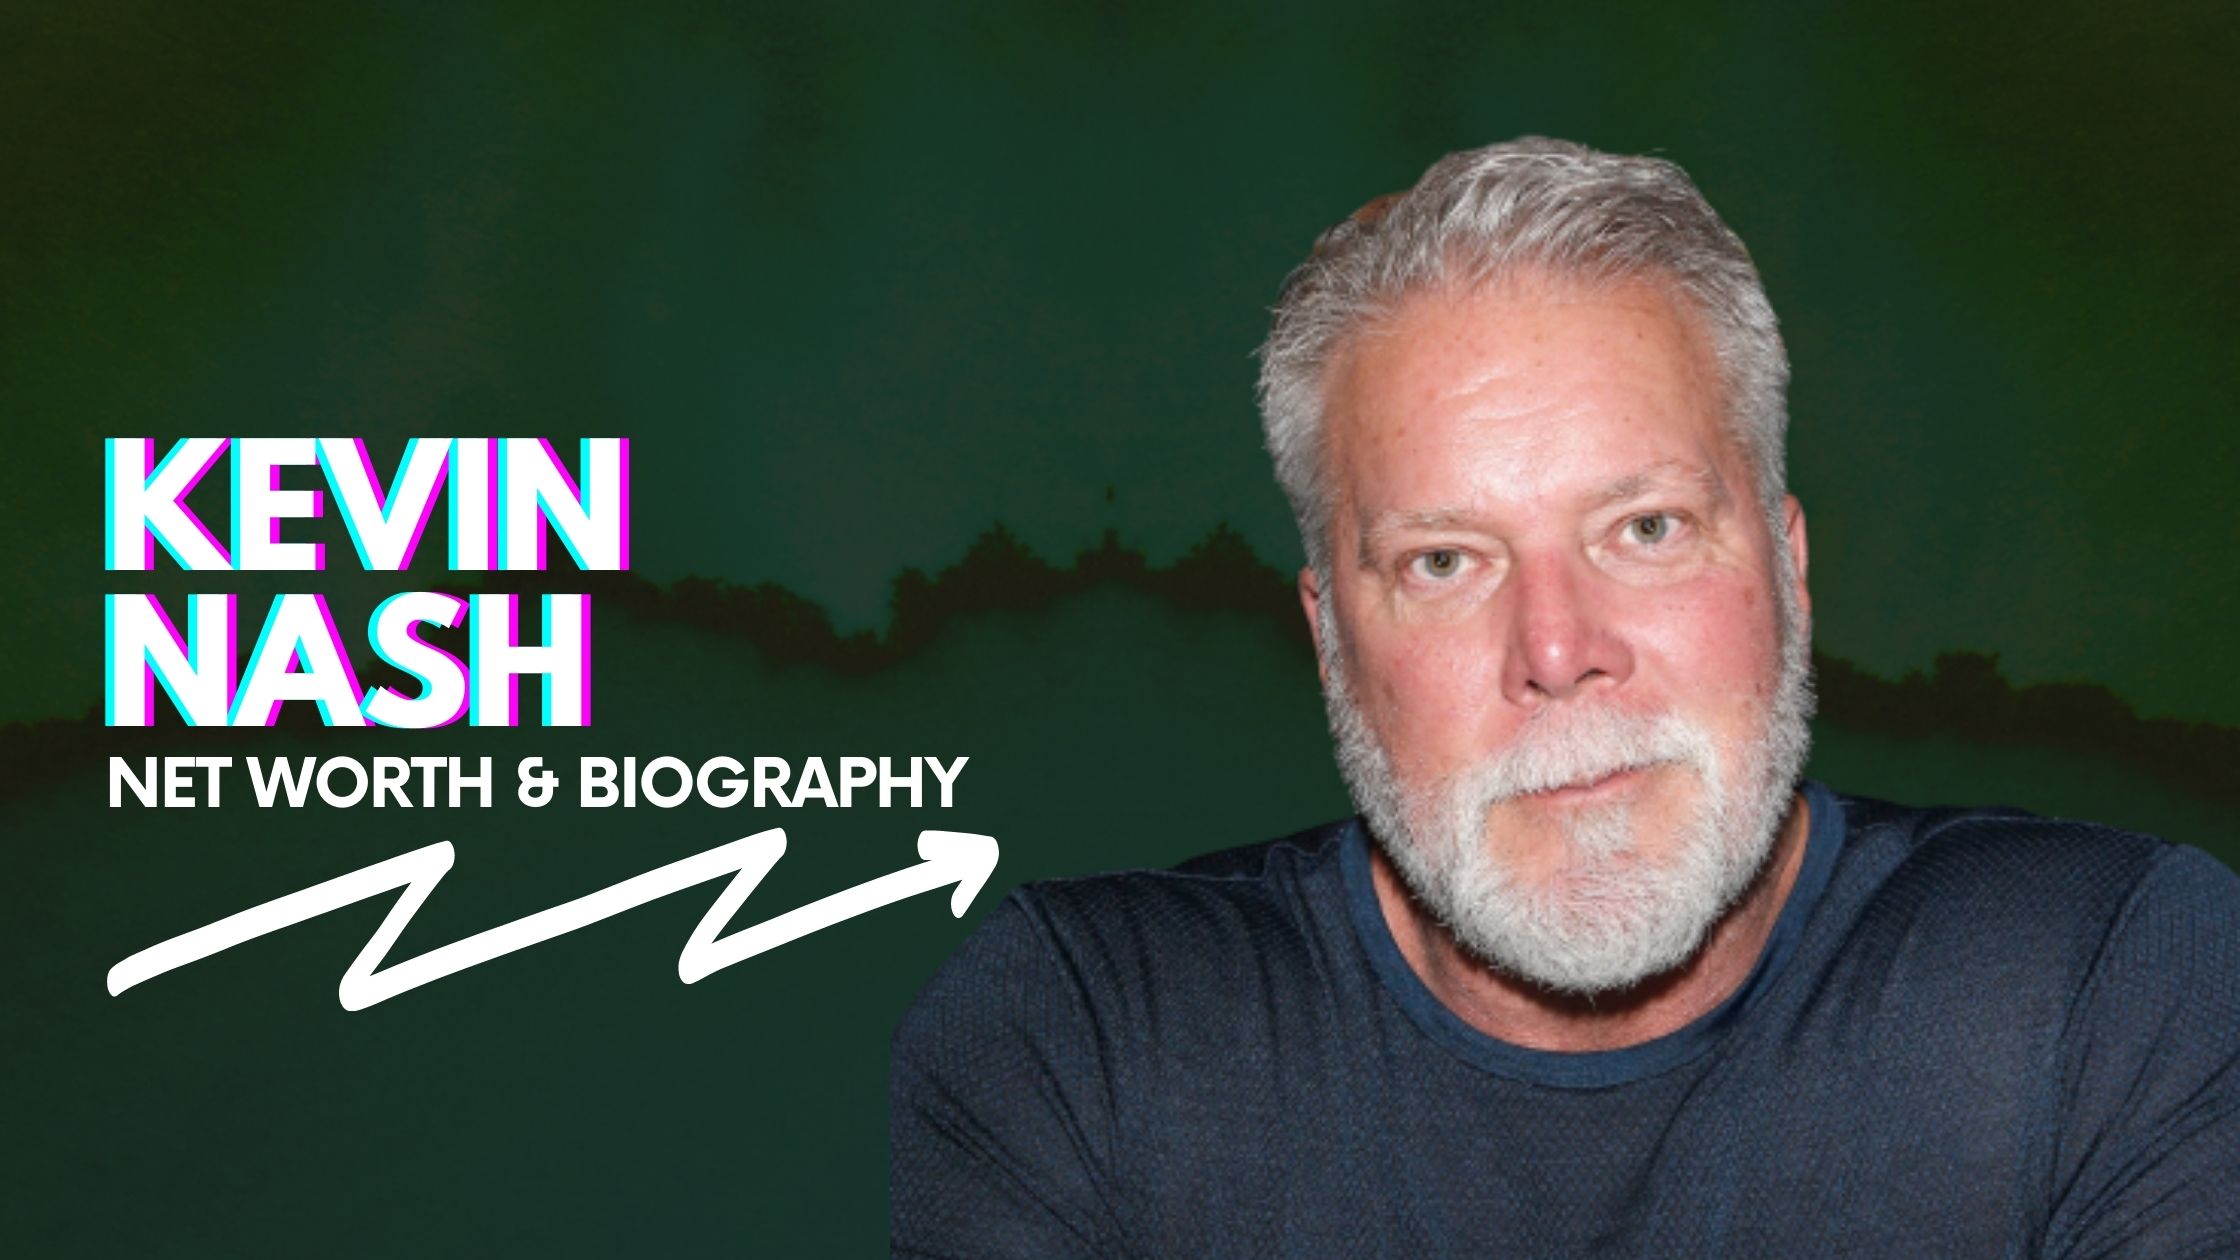 Kevin Nash net worth